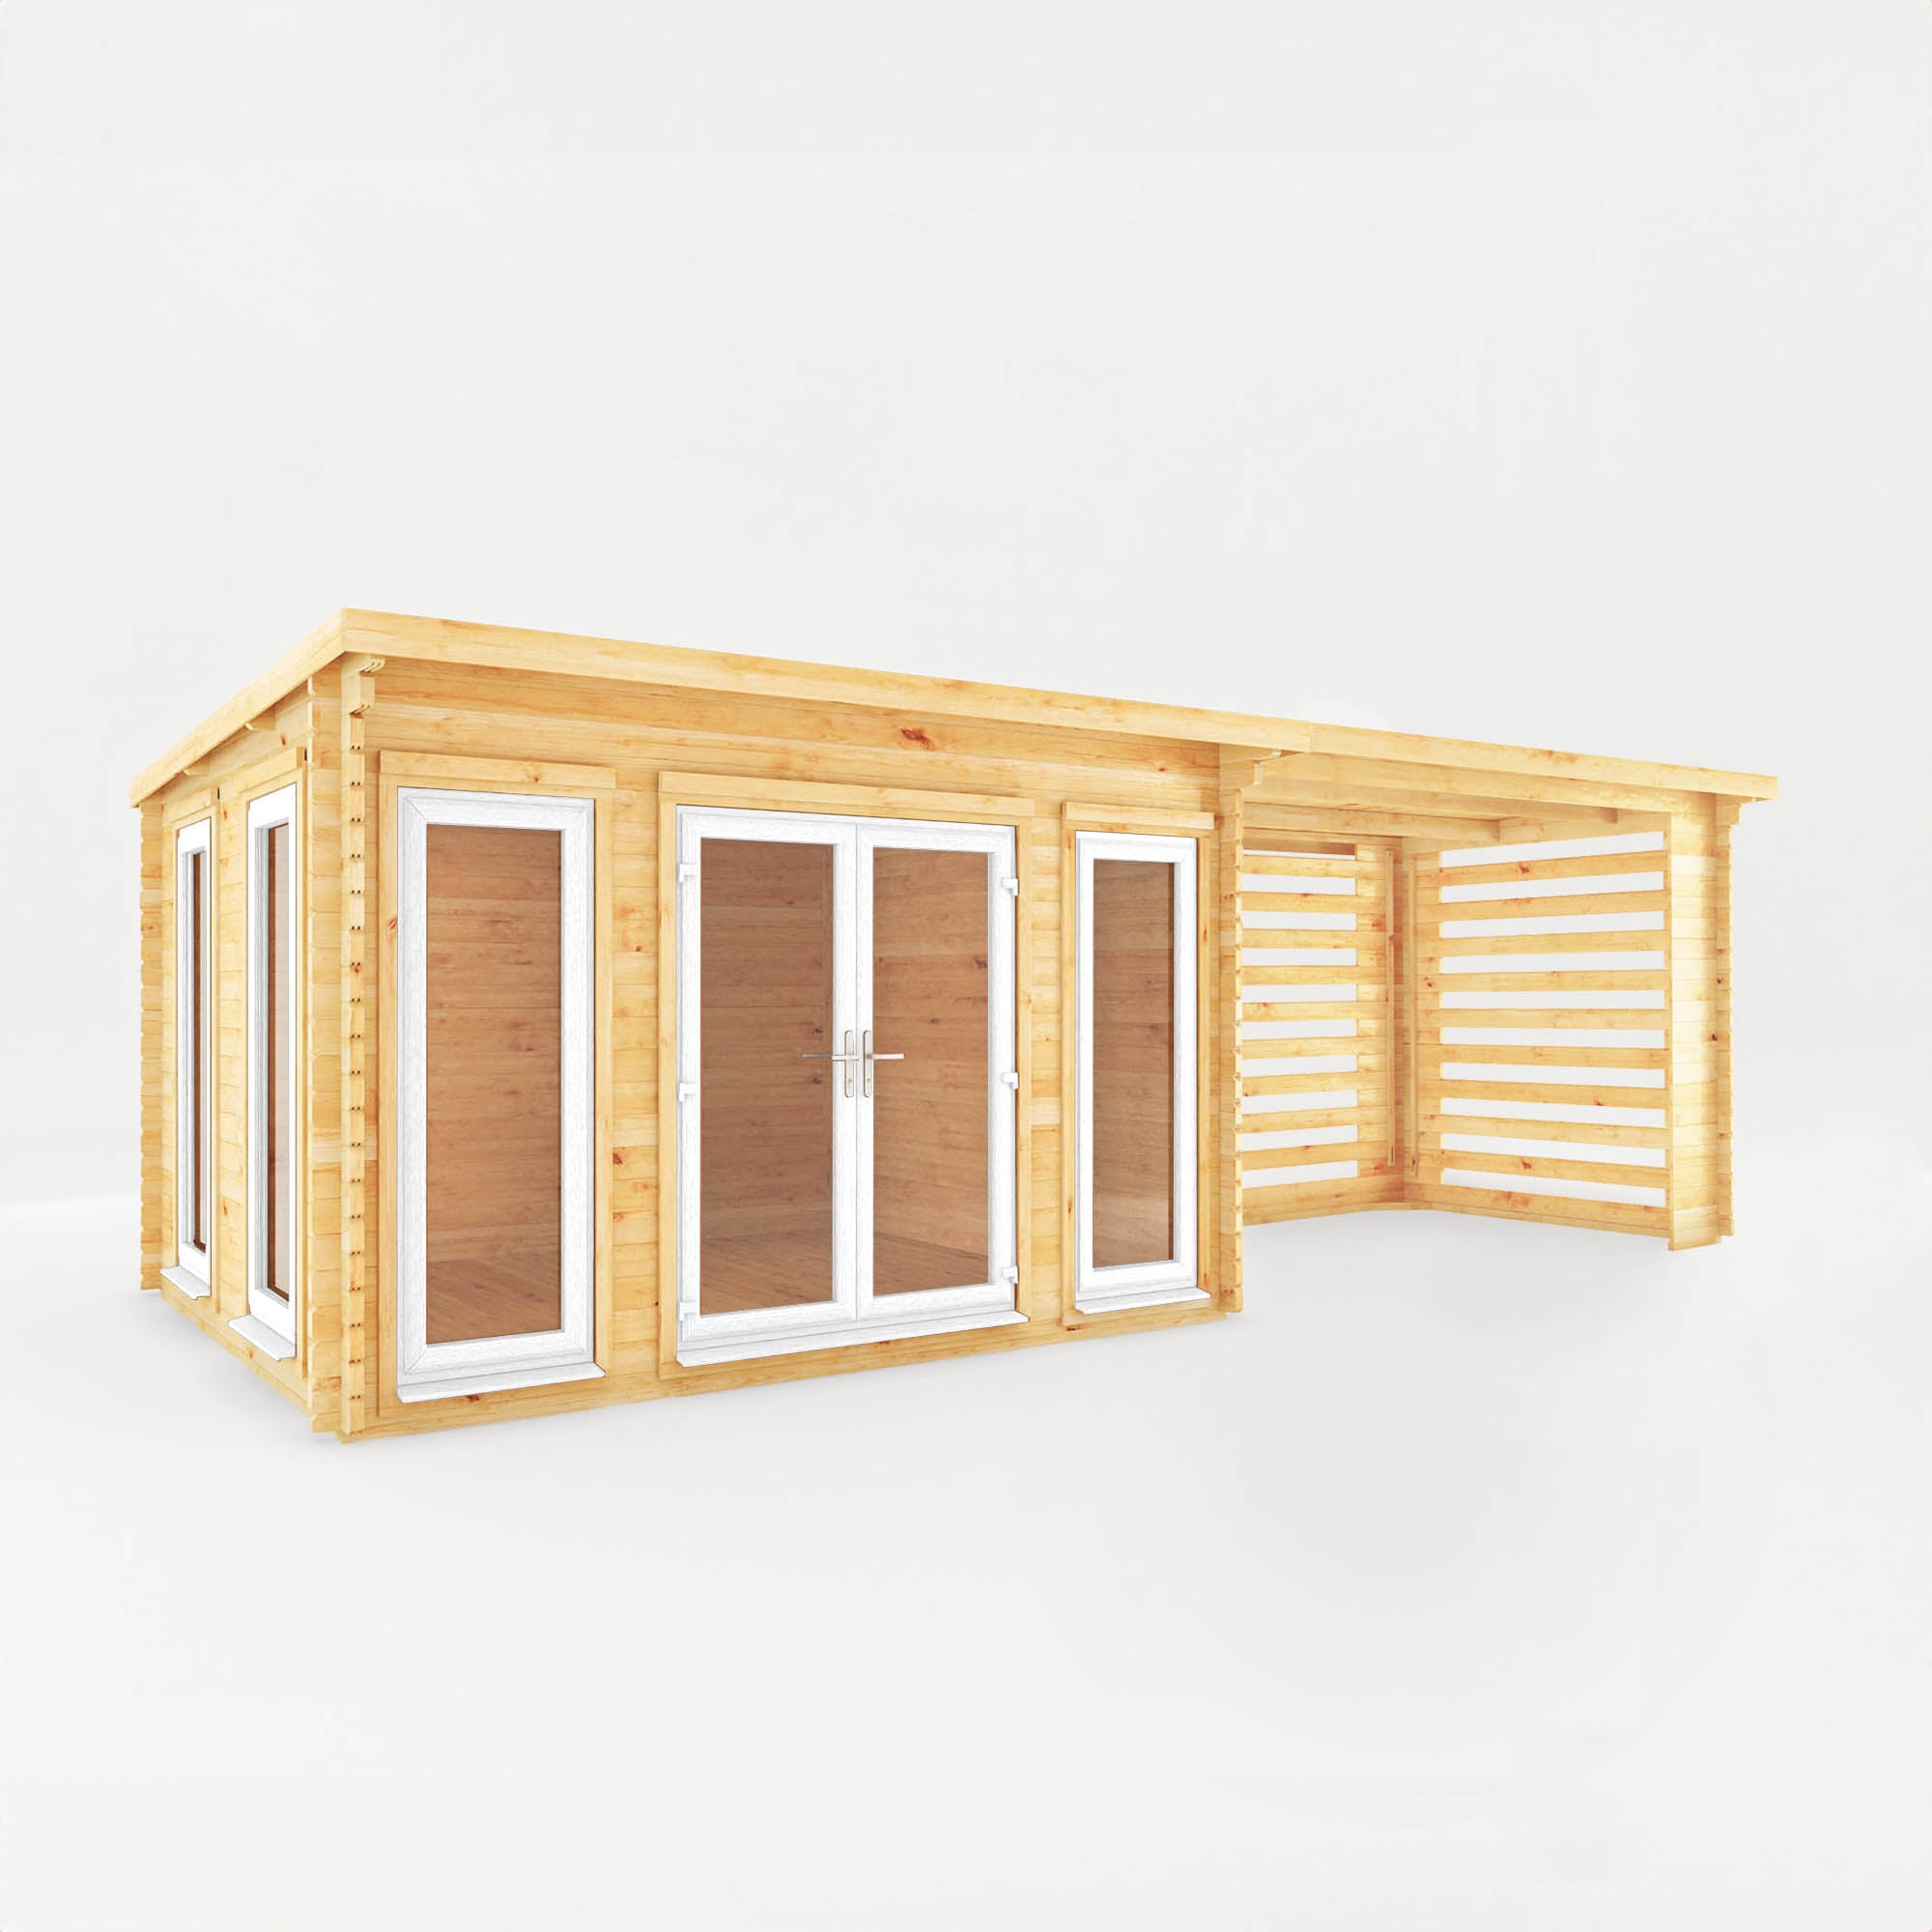 7m x 3m Studio Pent Log Cabin with Slatted Area - UPVC White